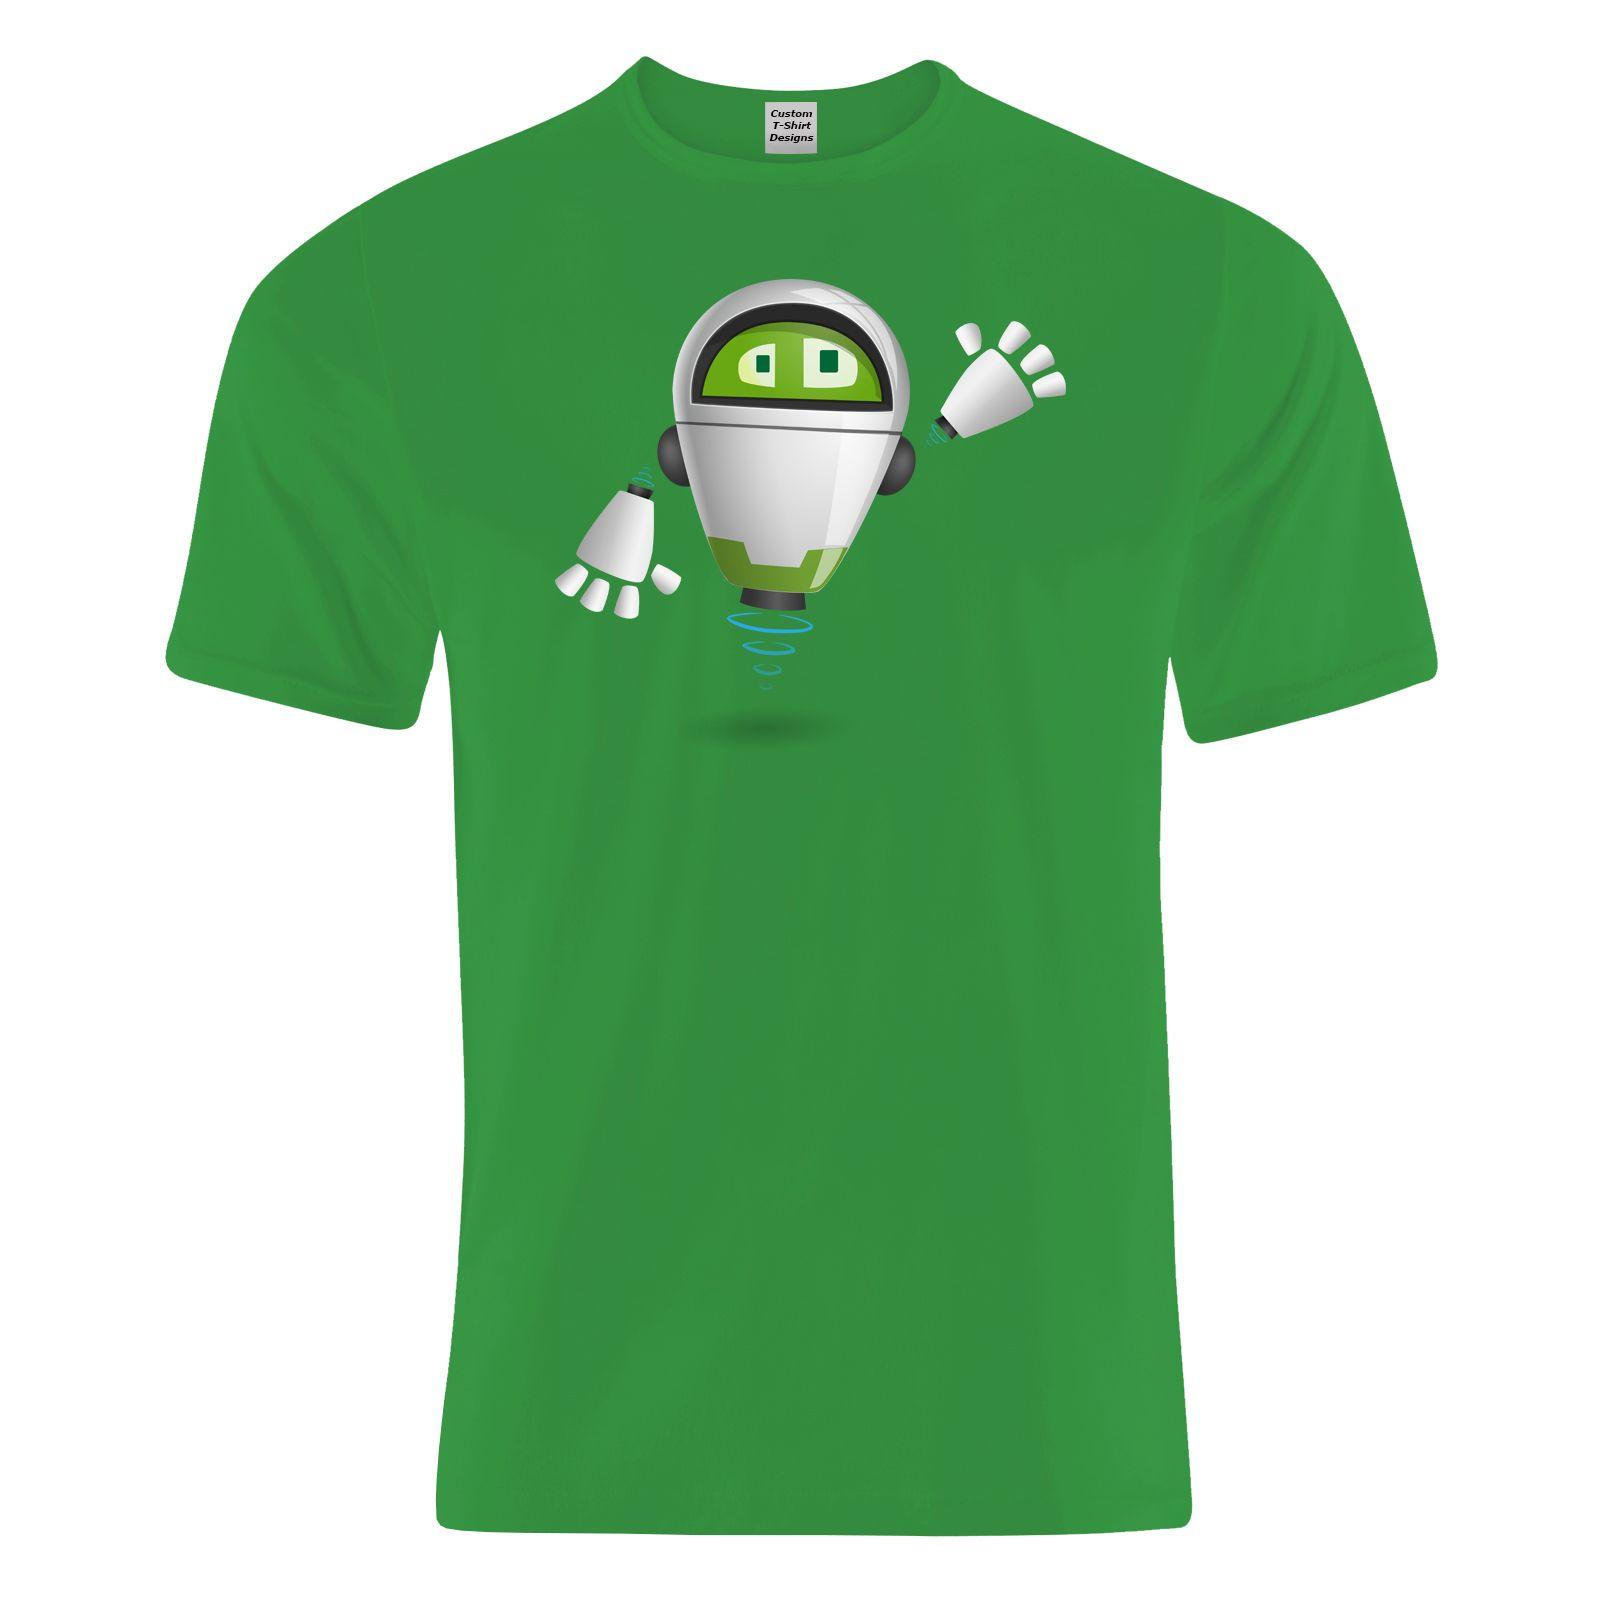 Green Cute Logo - Green Cute Robot Graphic Kids Cotton T Shirt T Shirt Designs